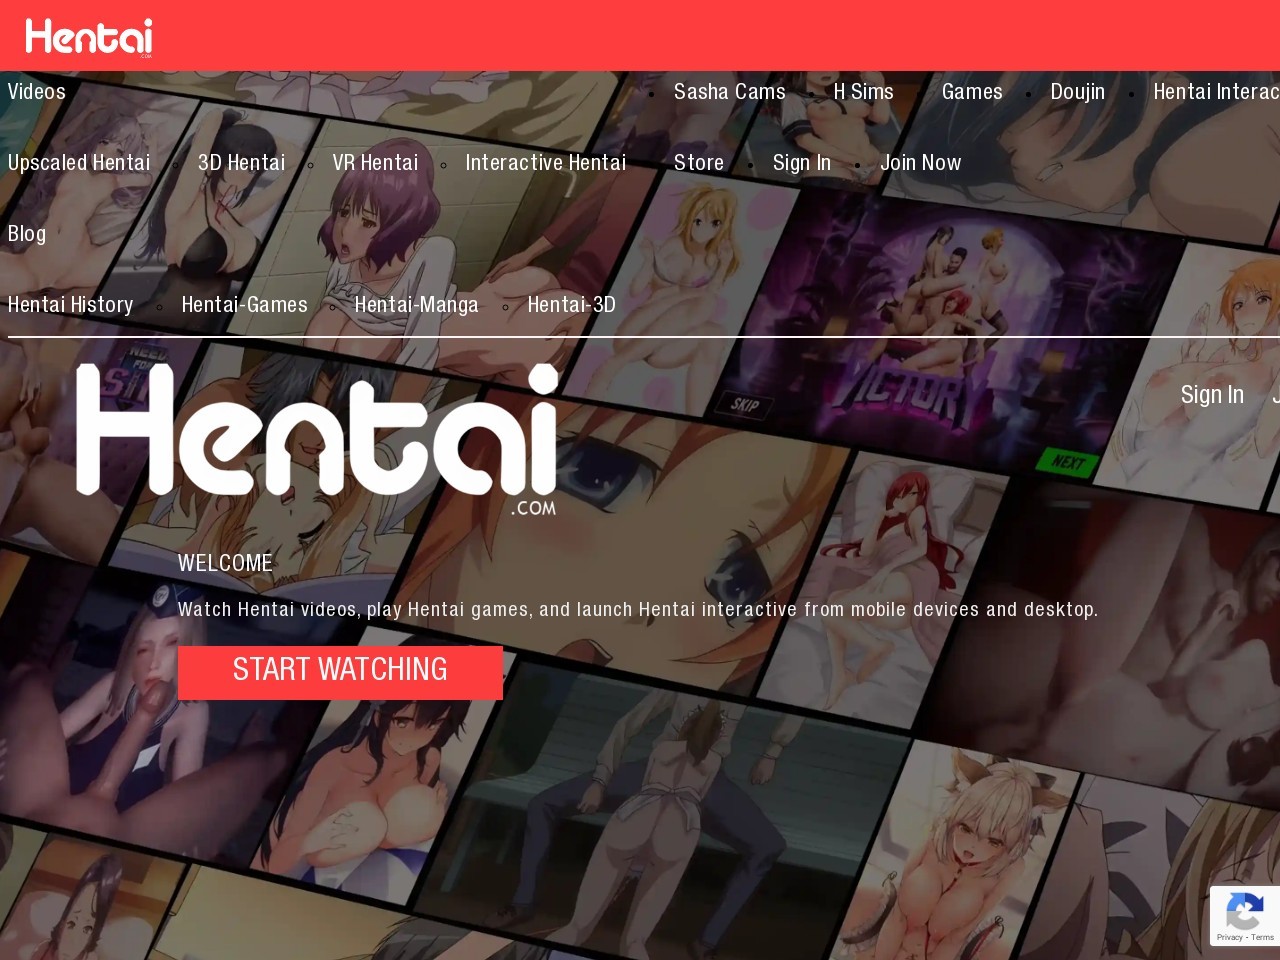 Hentai porn websites